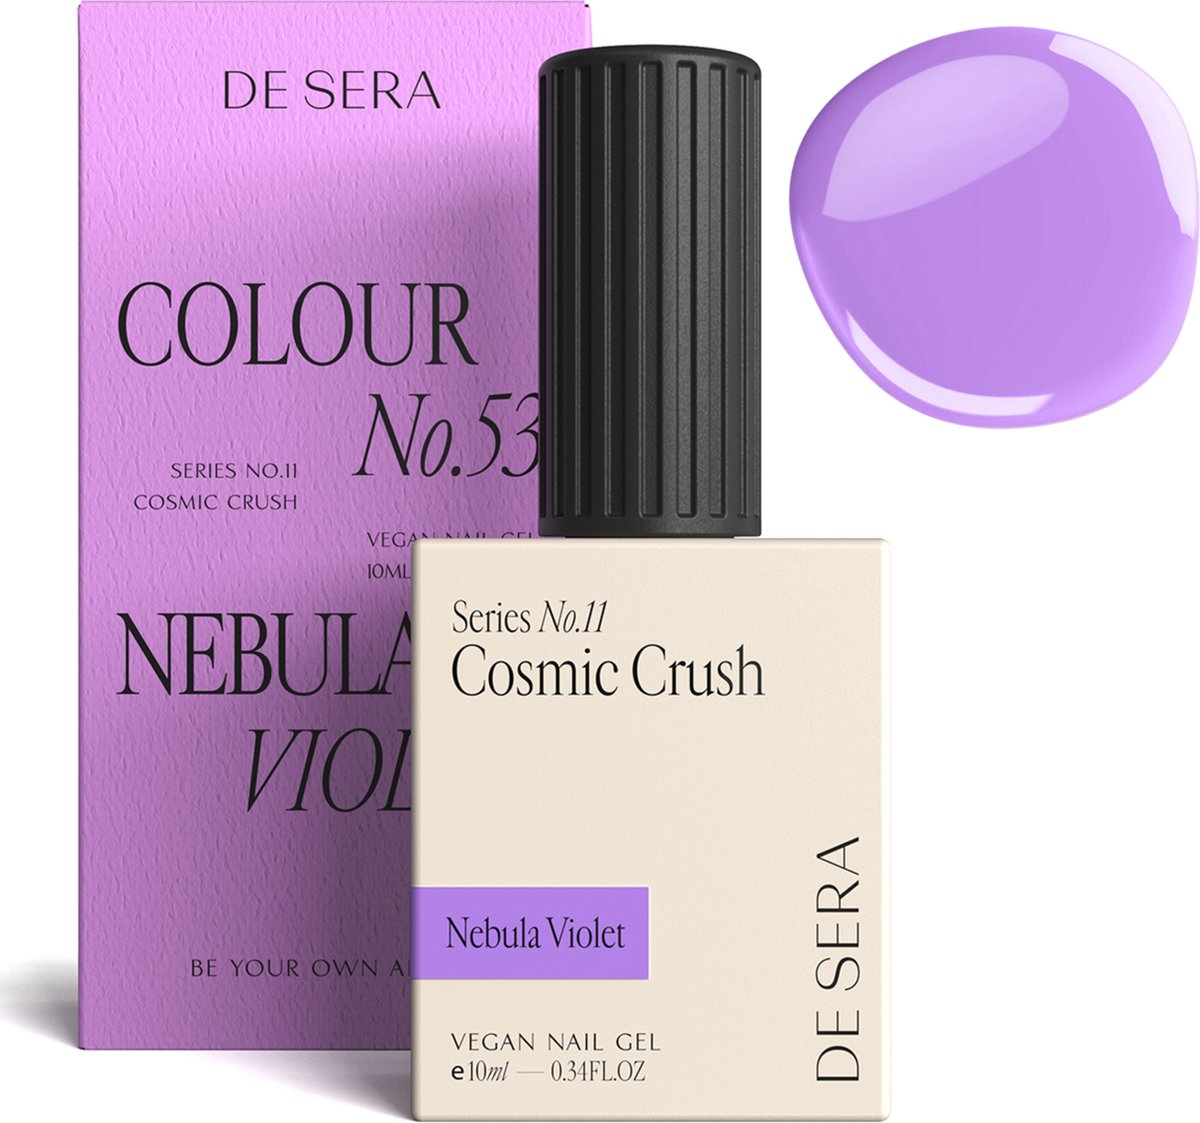 De Sera Gellak - Paarse Gel Nagellak - Paars - 10ML - Colour No. 53 Nebula Violet